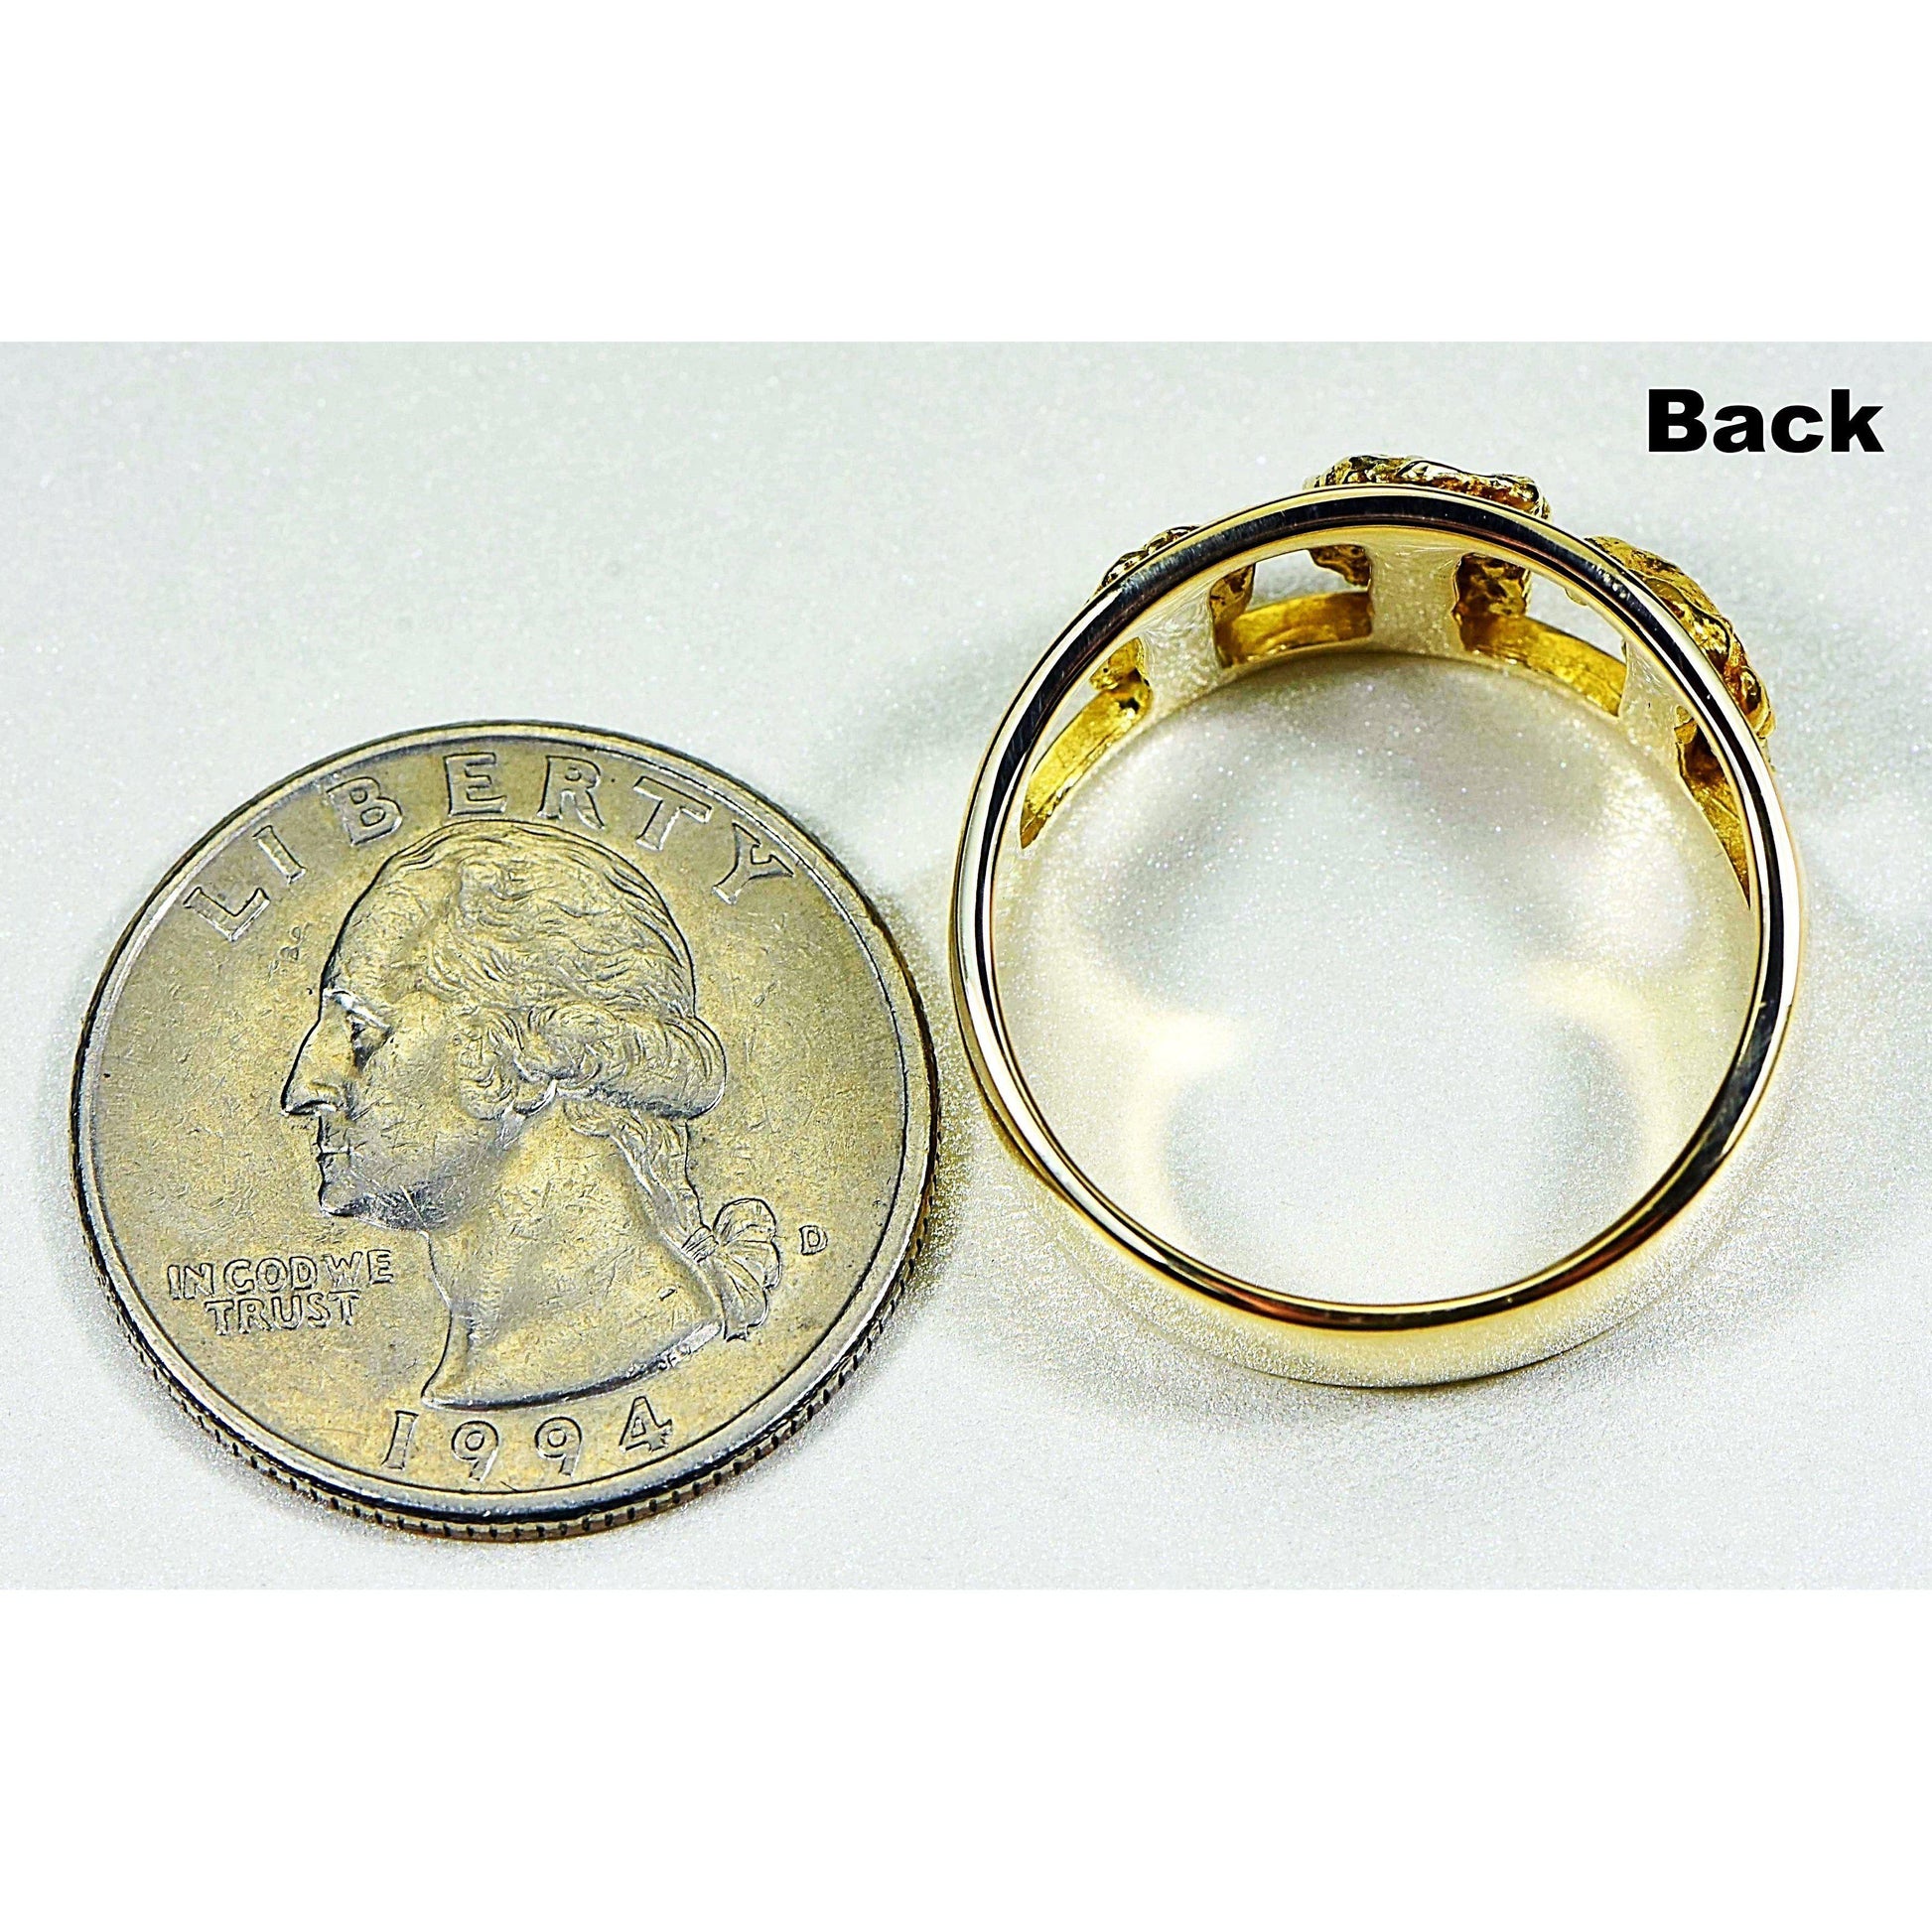 Gold Nugget Men's Ring - RM1087N/12MM-Destination Gold Detectors